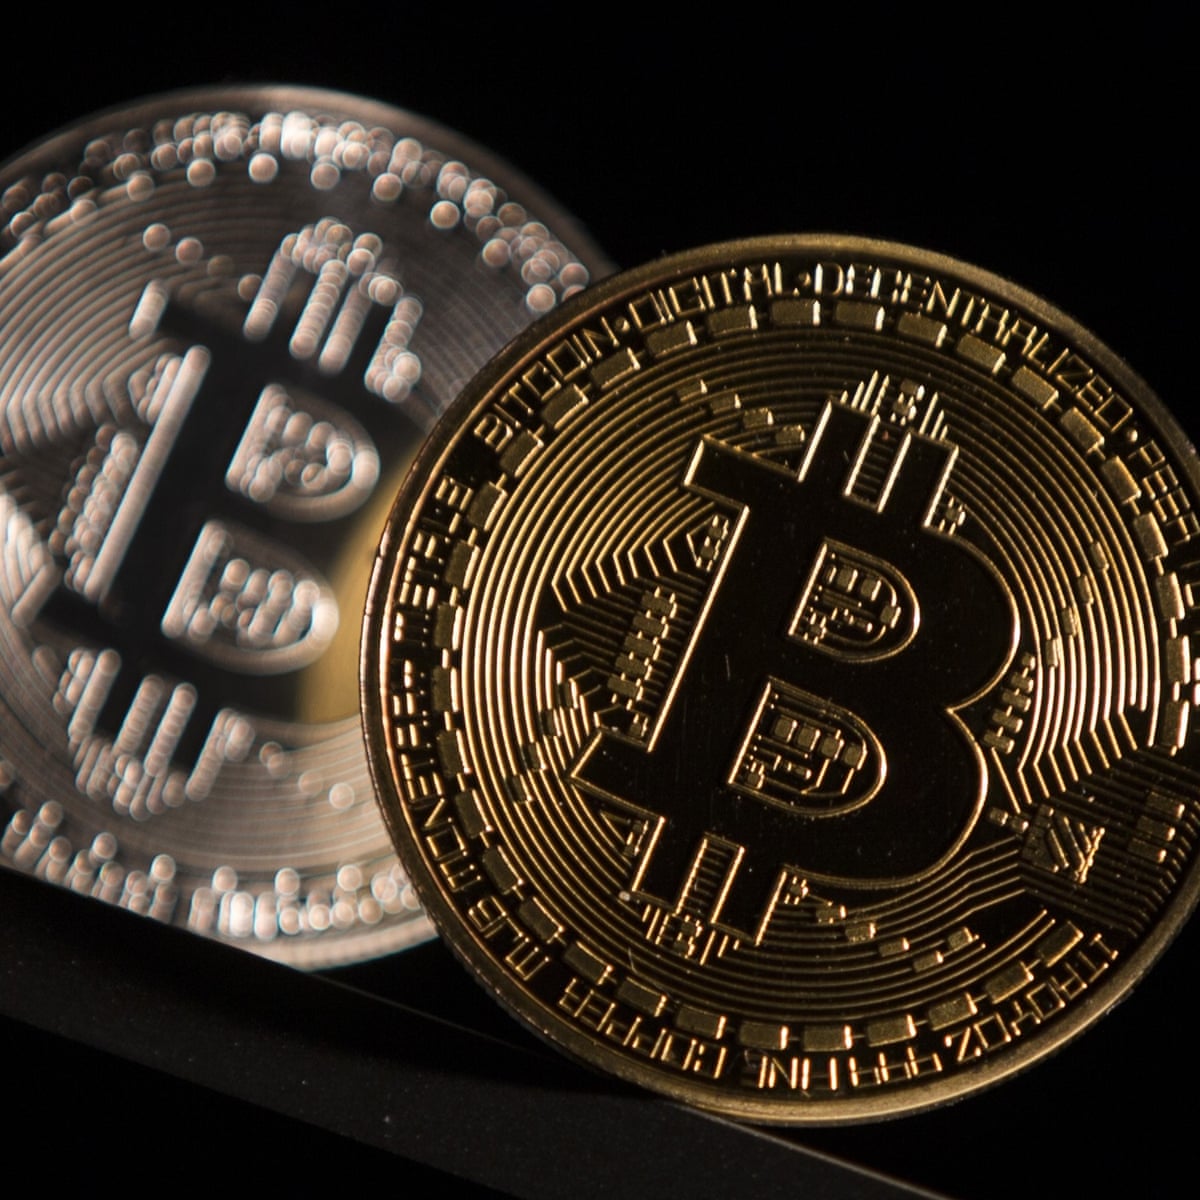 trader bitcoin ao vivo bitcoins should i invest